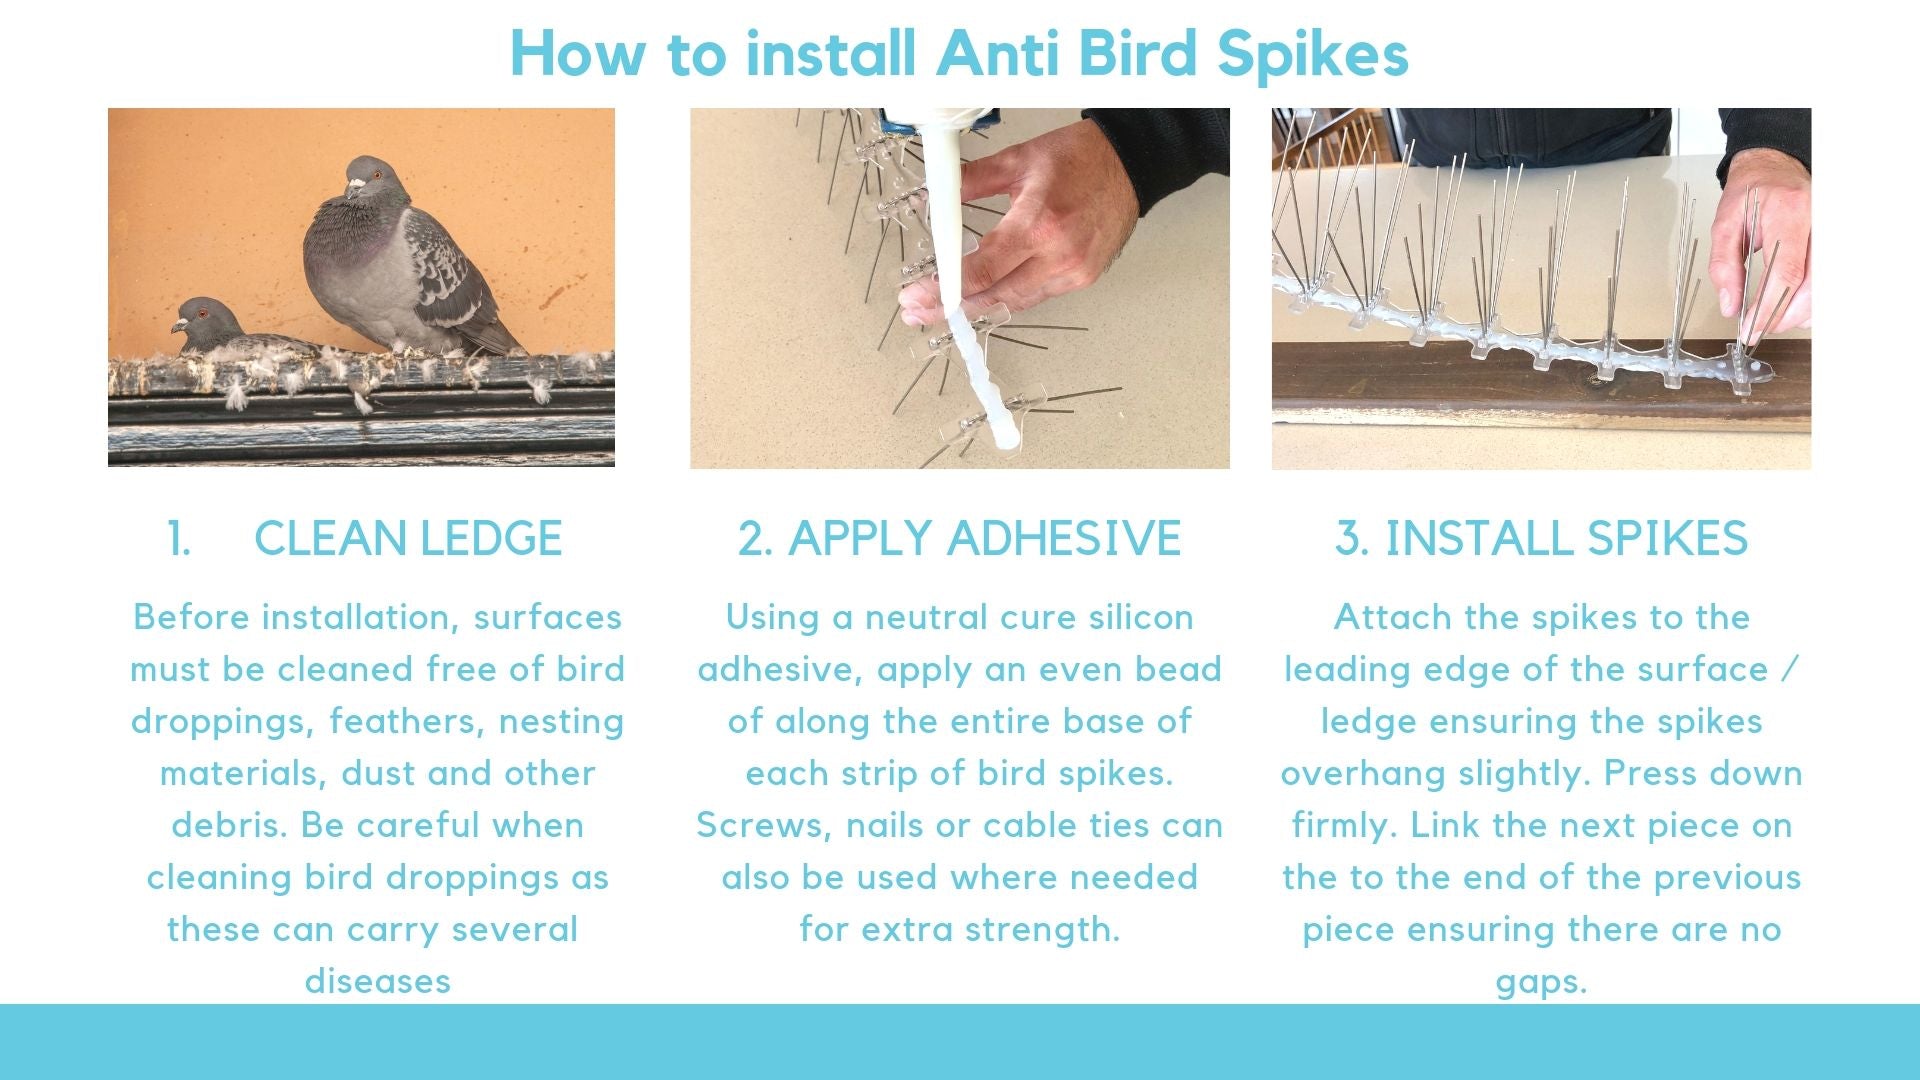 Anti Bird Spikes Installation Instructions